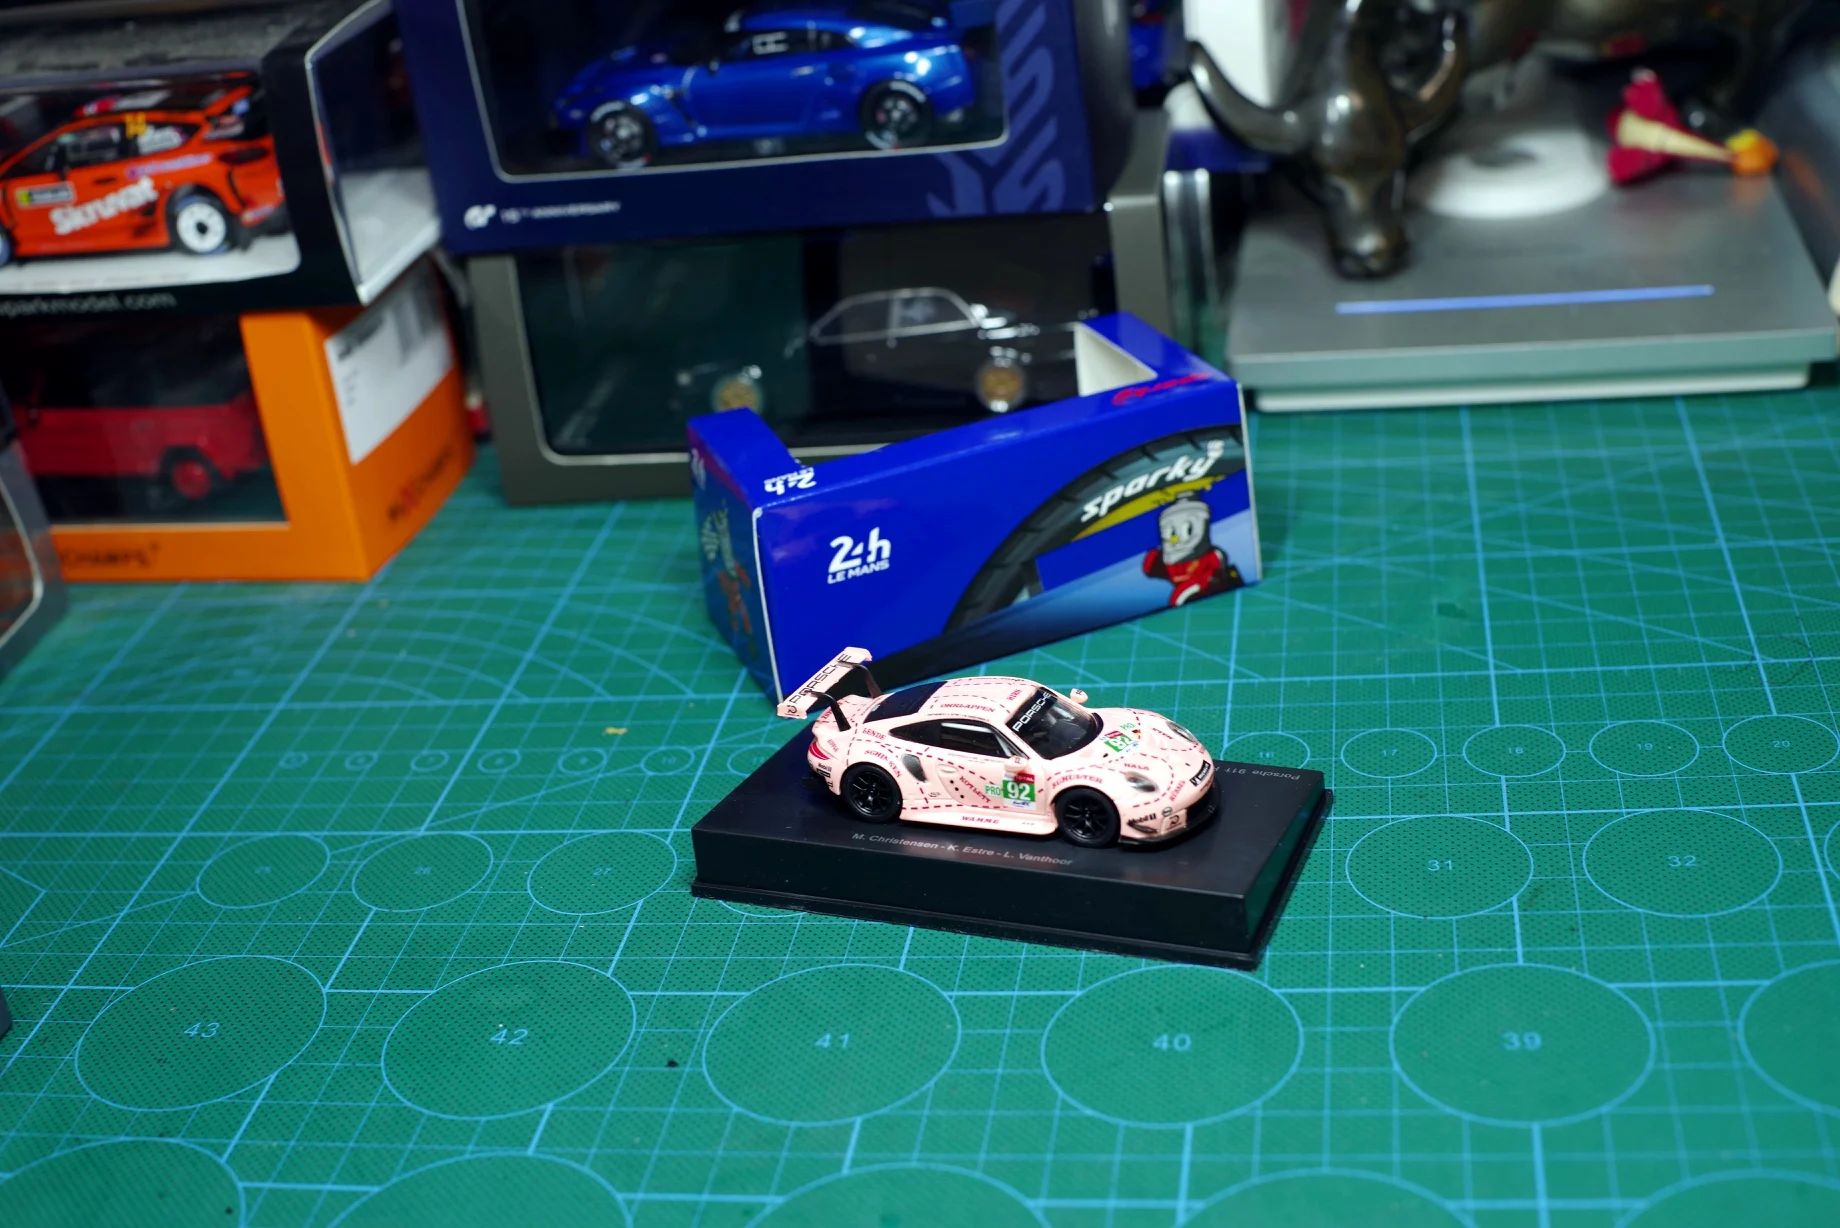 

SPARK Model 1/64 2018 Le Mans GT Porsc 911 RSR #92 Pink Pig Diecast Metal Model Car toy With Original Box